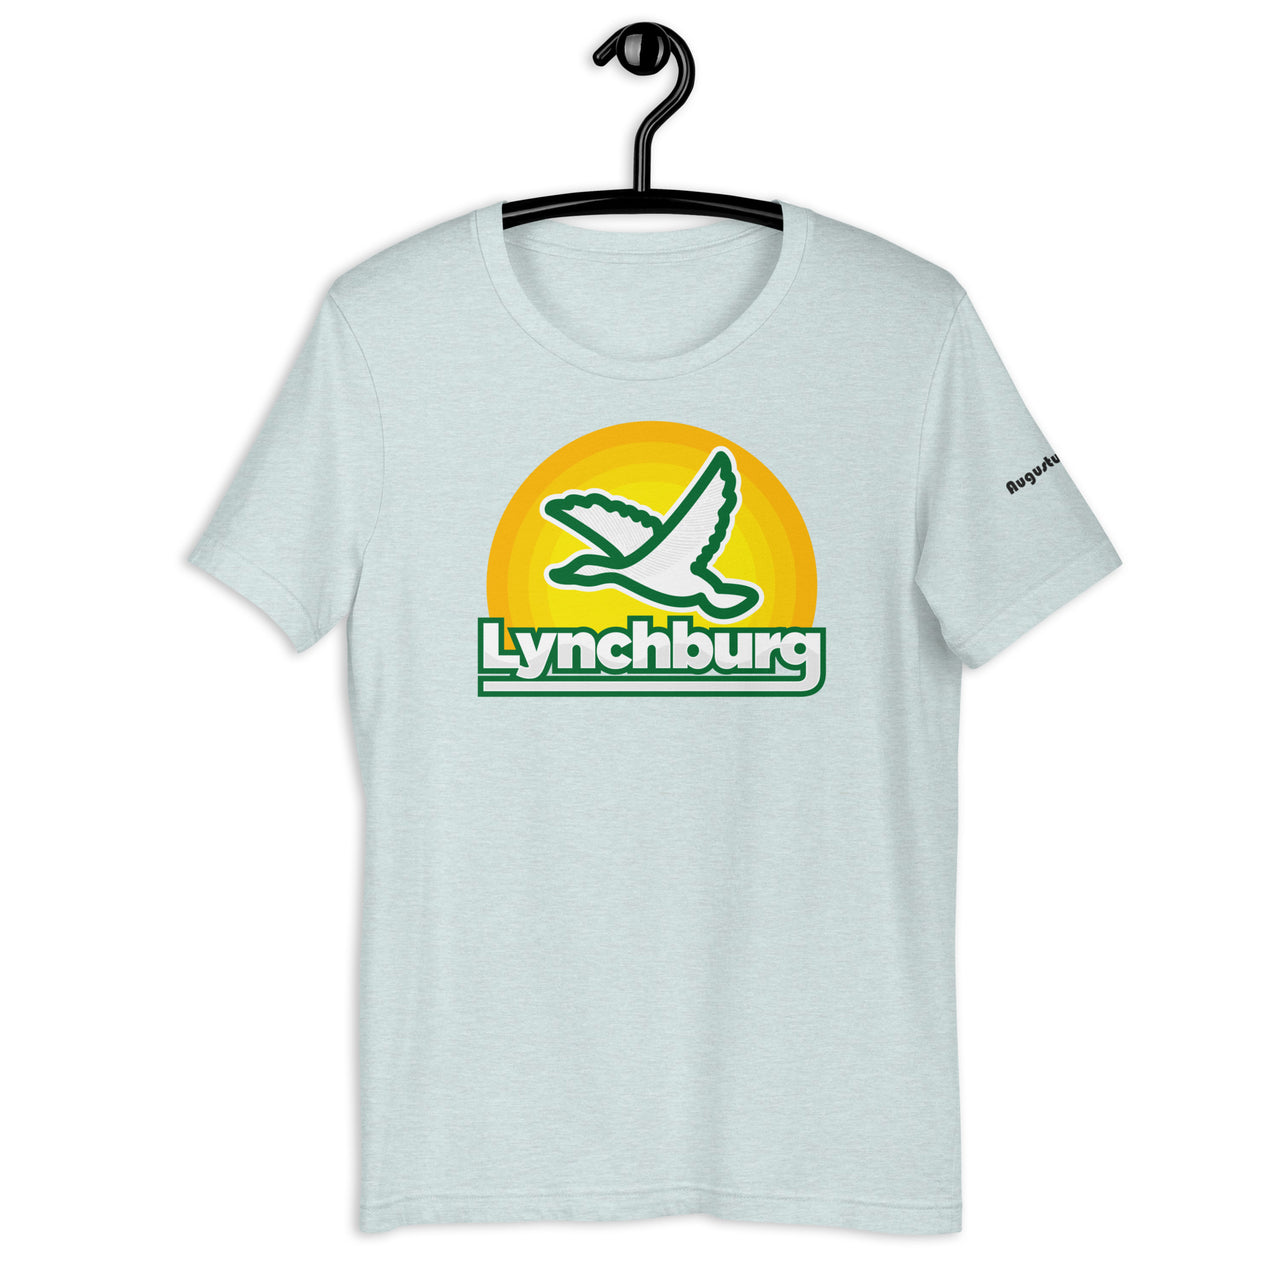 Lynchburg - Mens